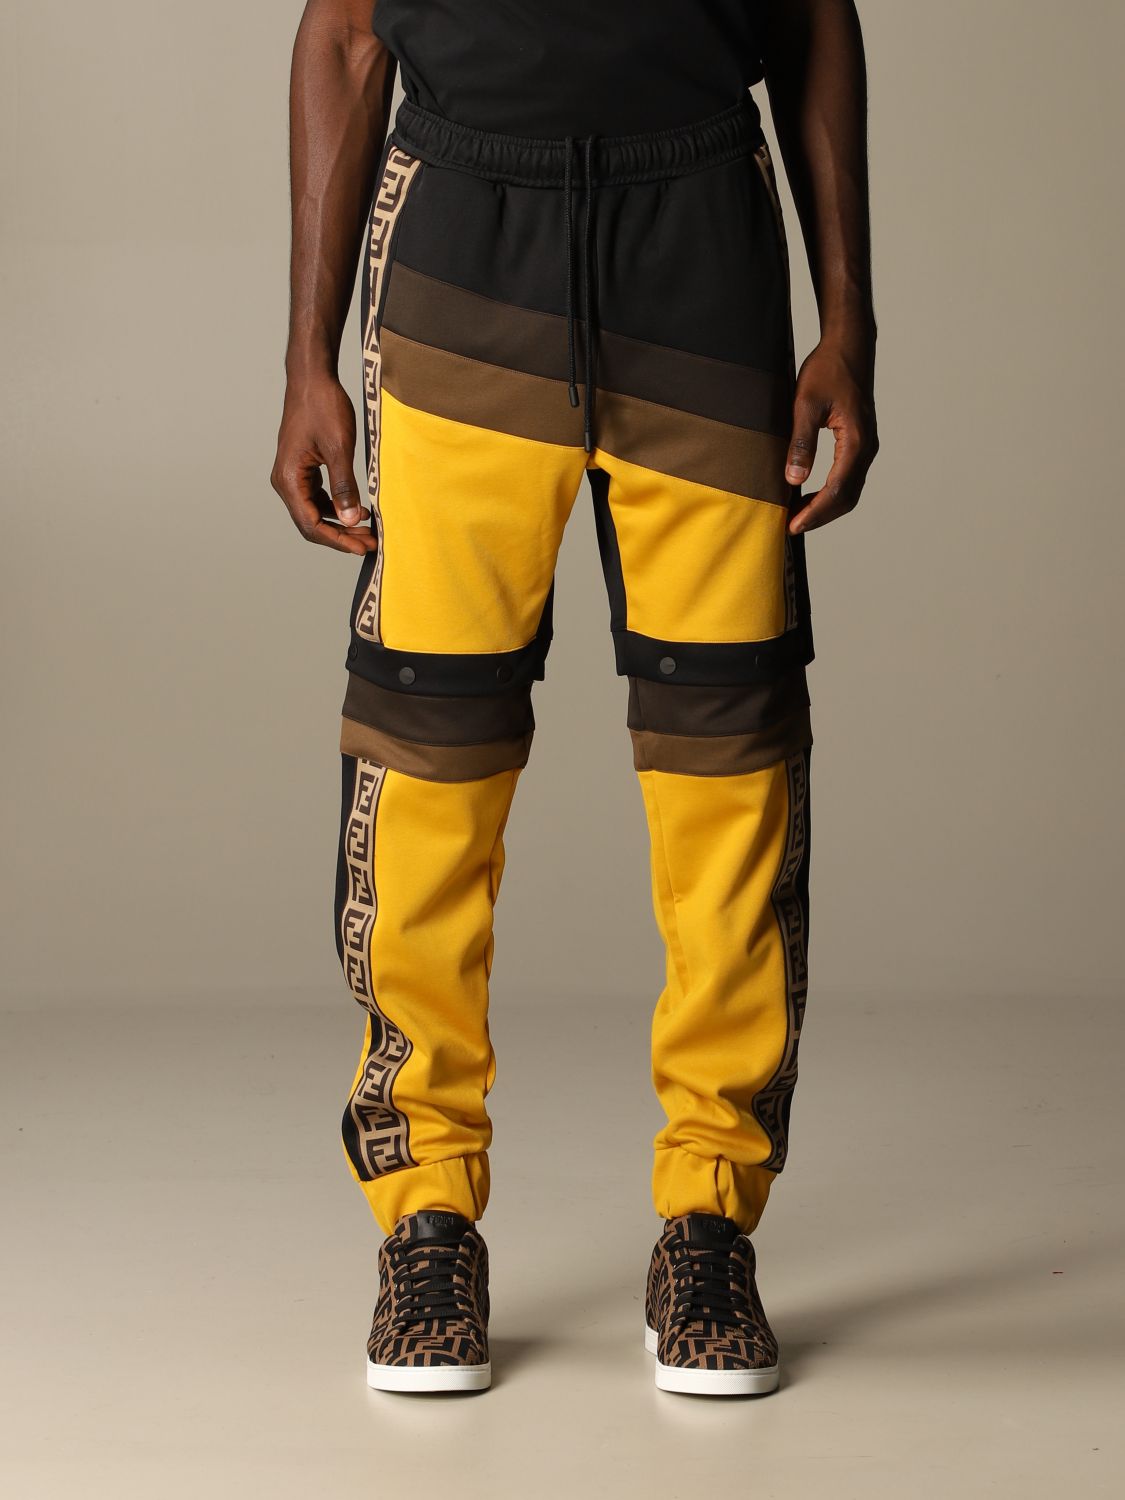 FENDI: jogging trousers with bands and FF logo - Black | Fendi pants ...